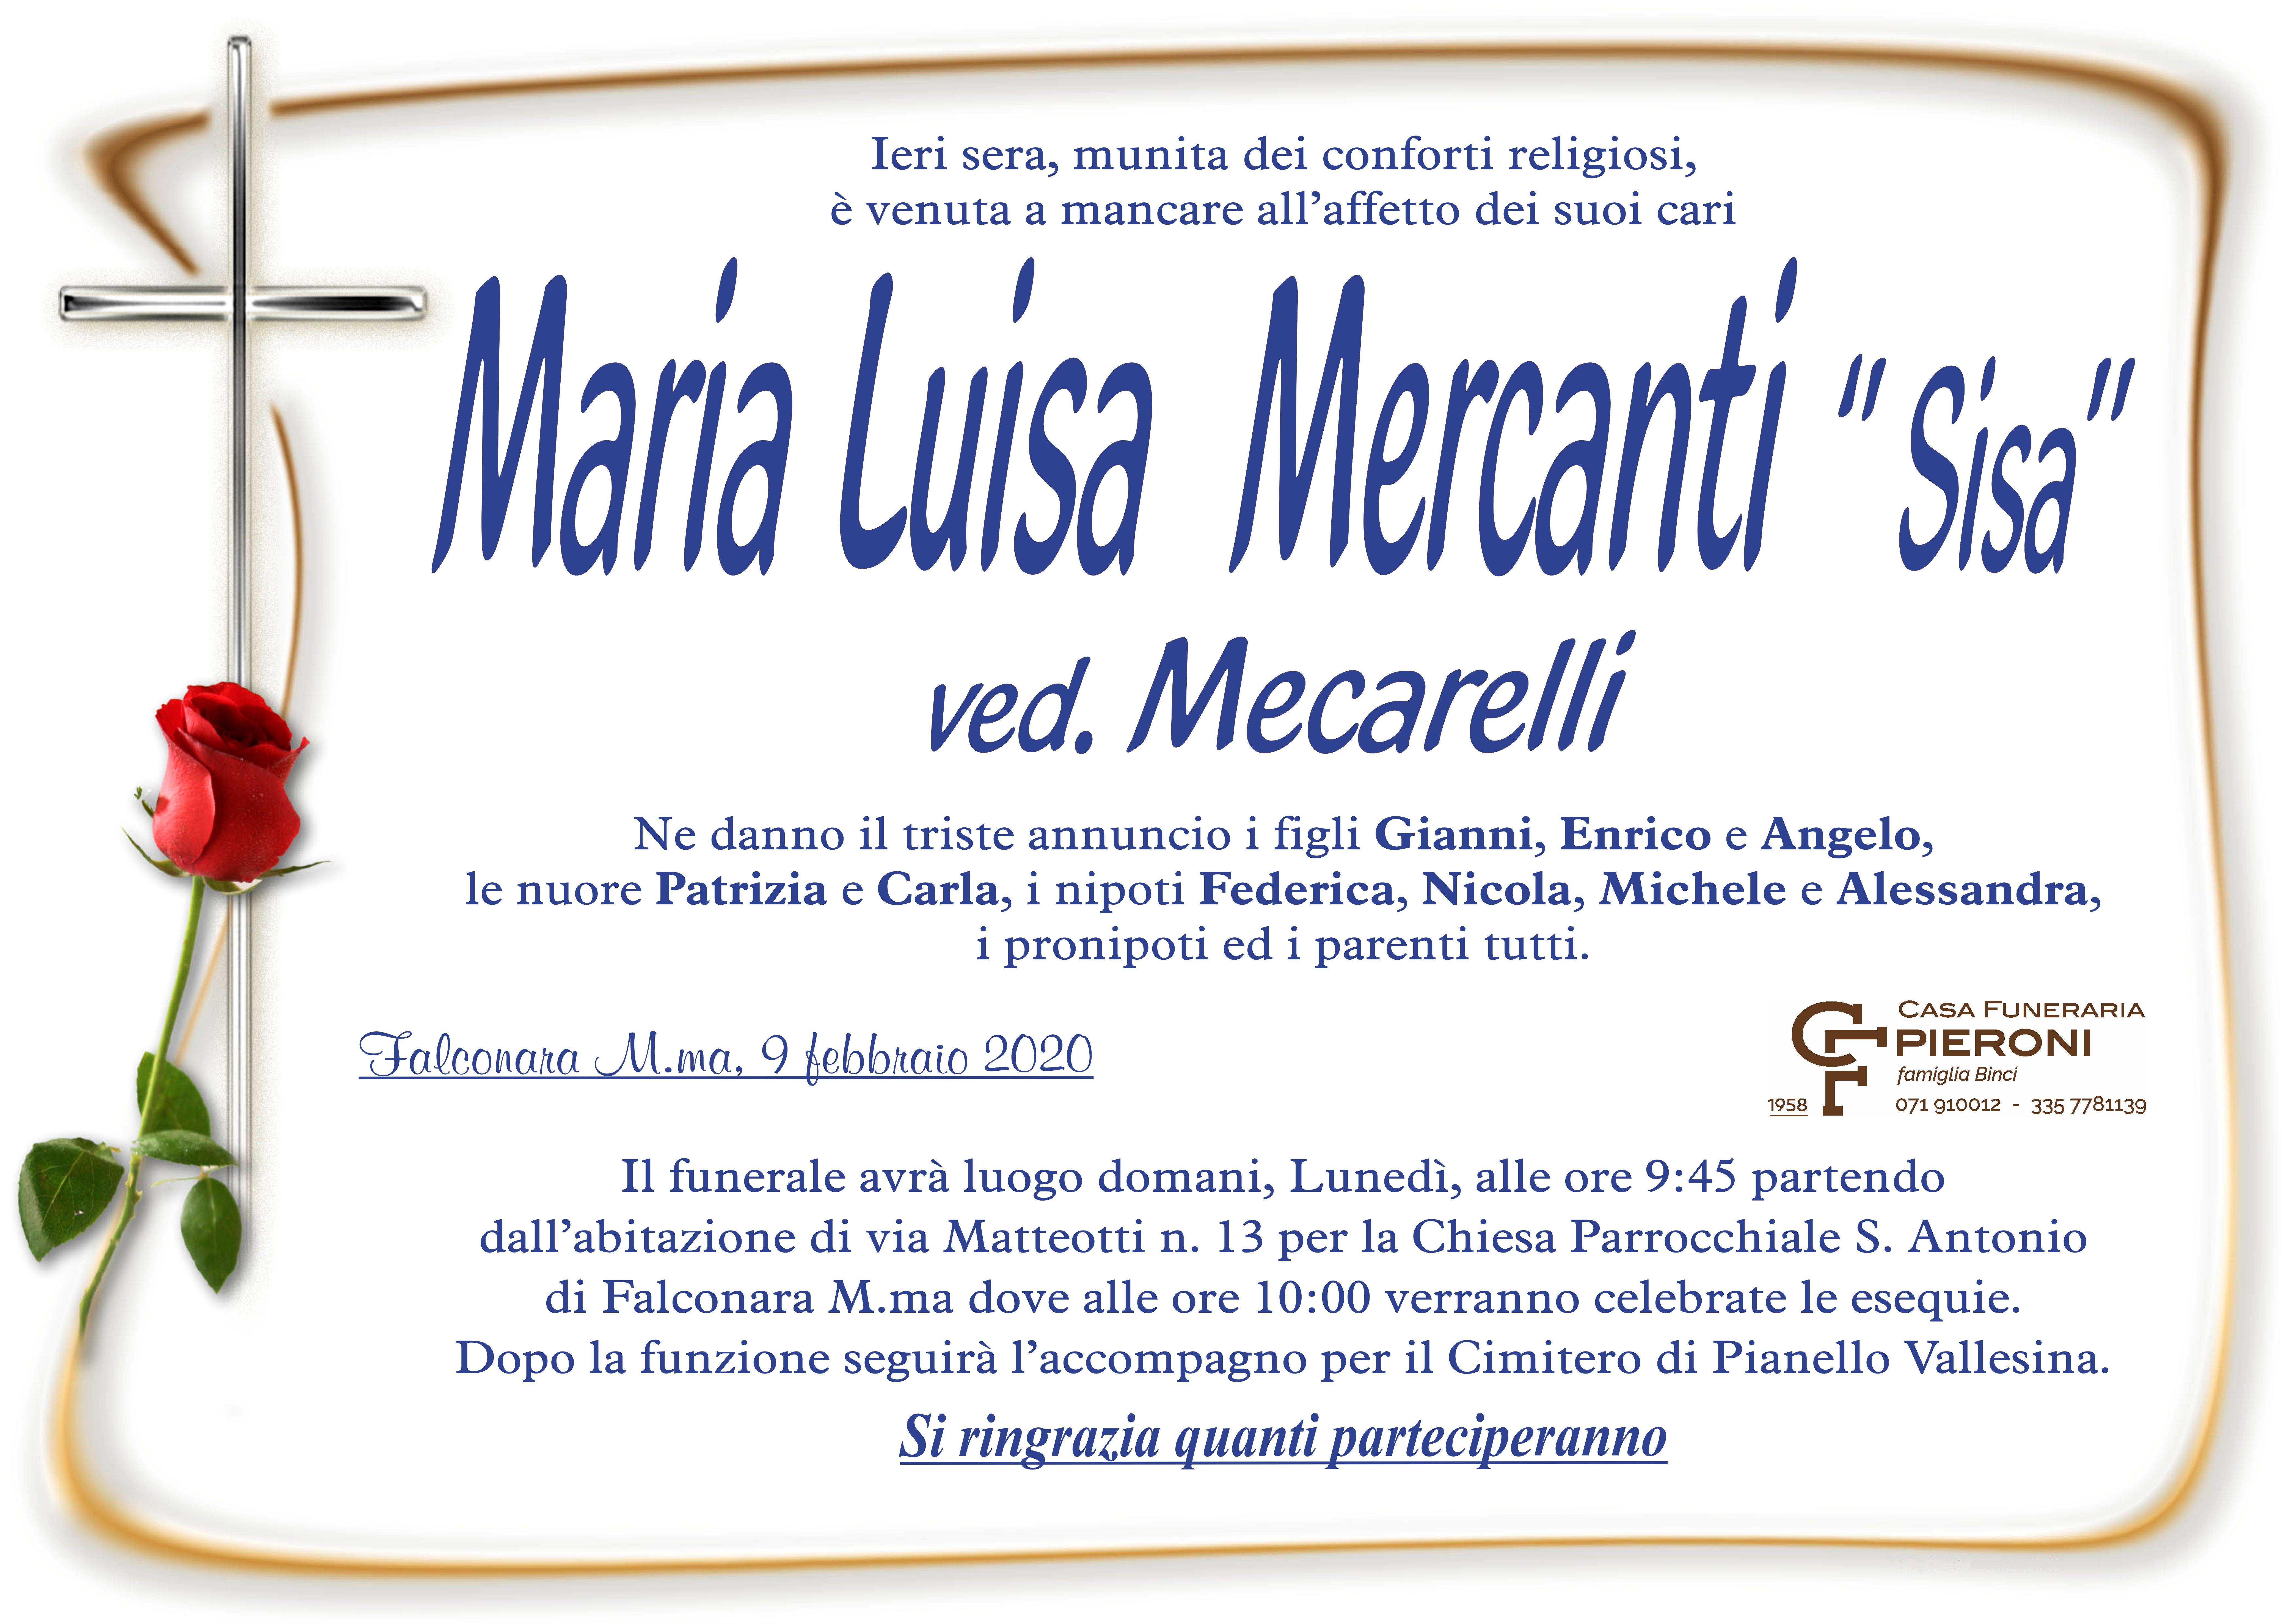 Maria Luisa Mercanti